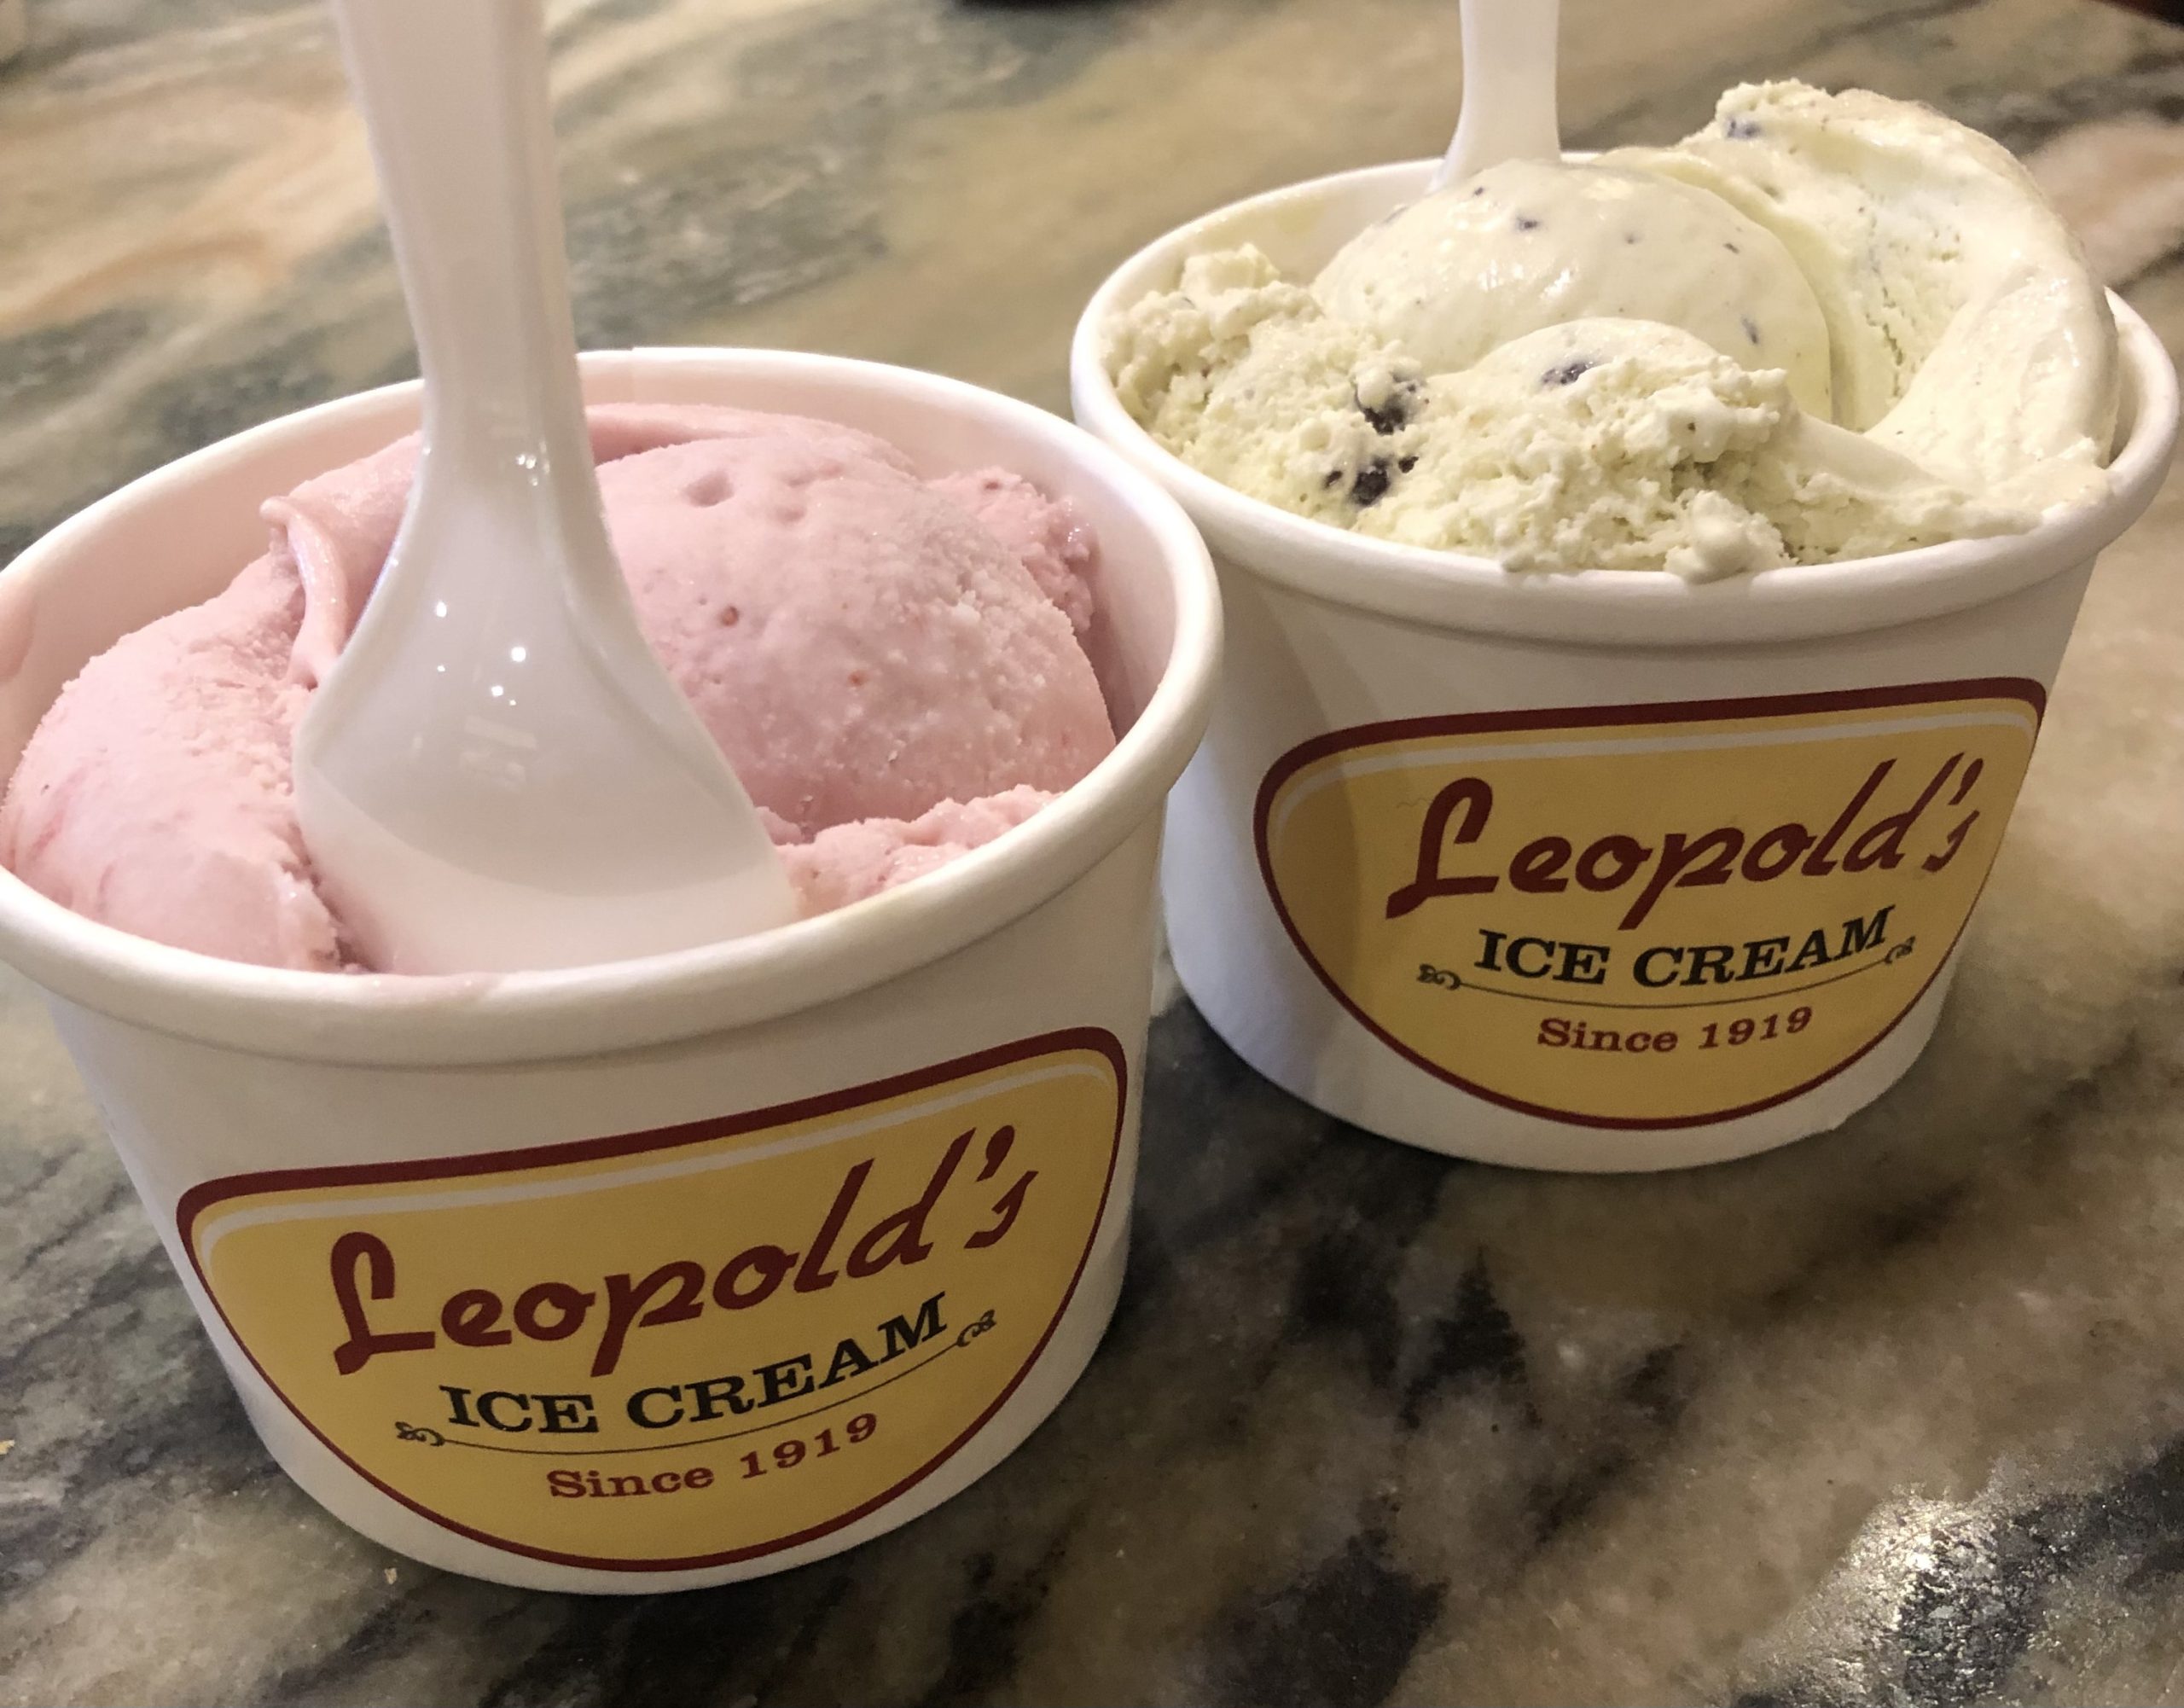 Two Leopald's vegan ice creams